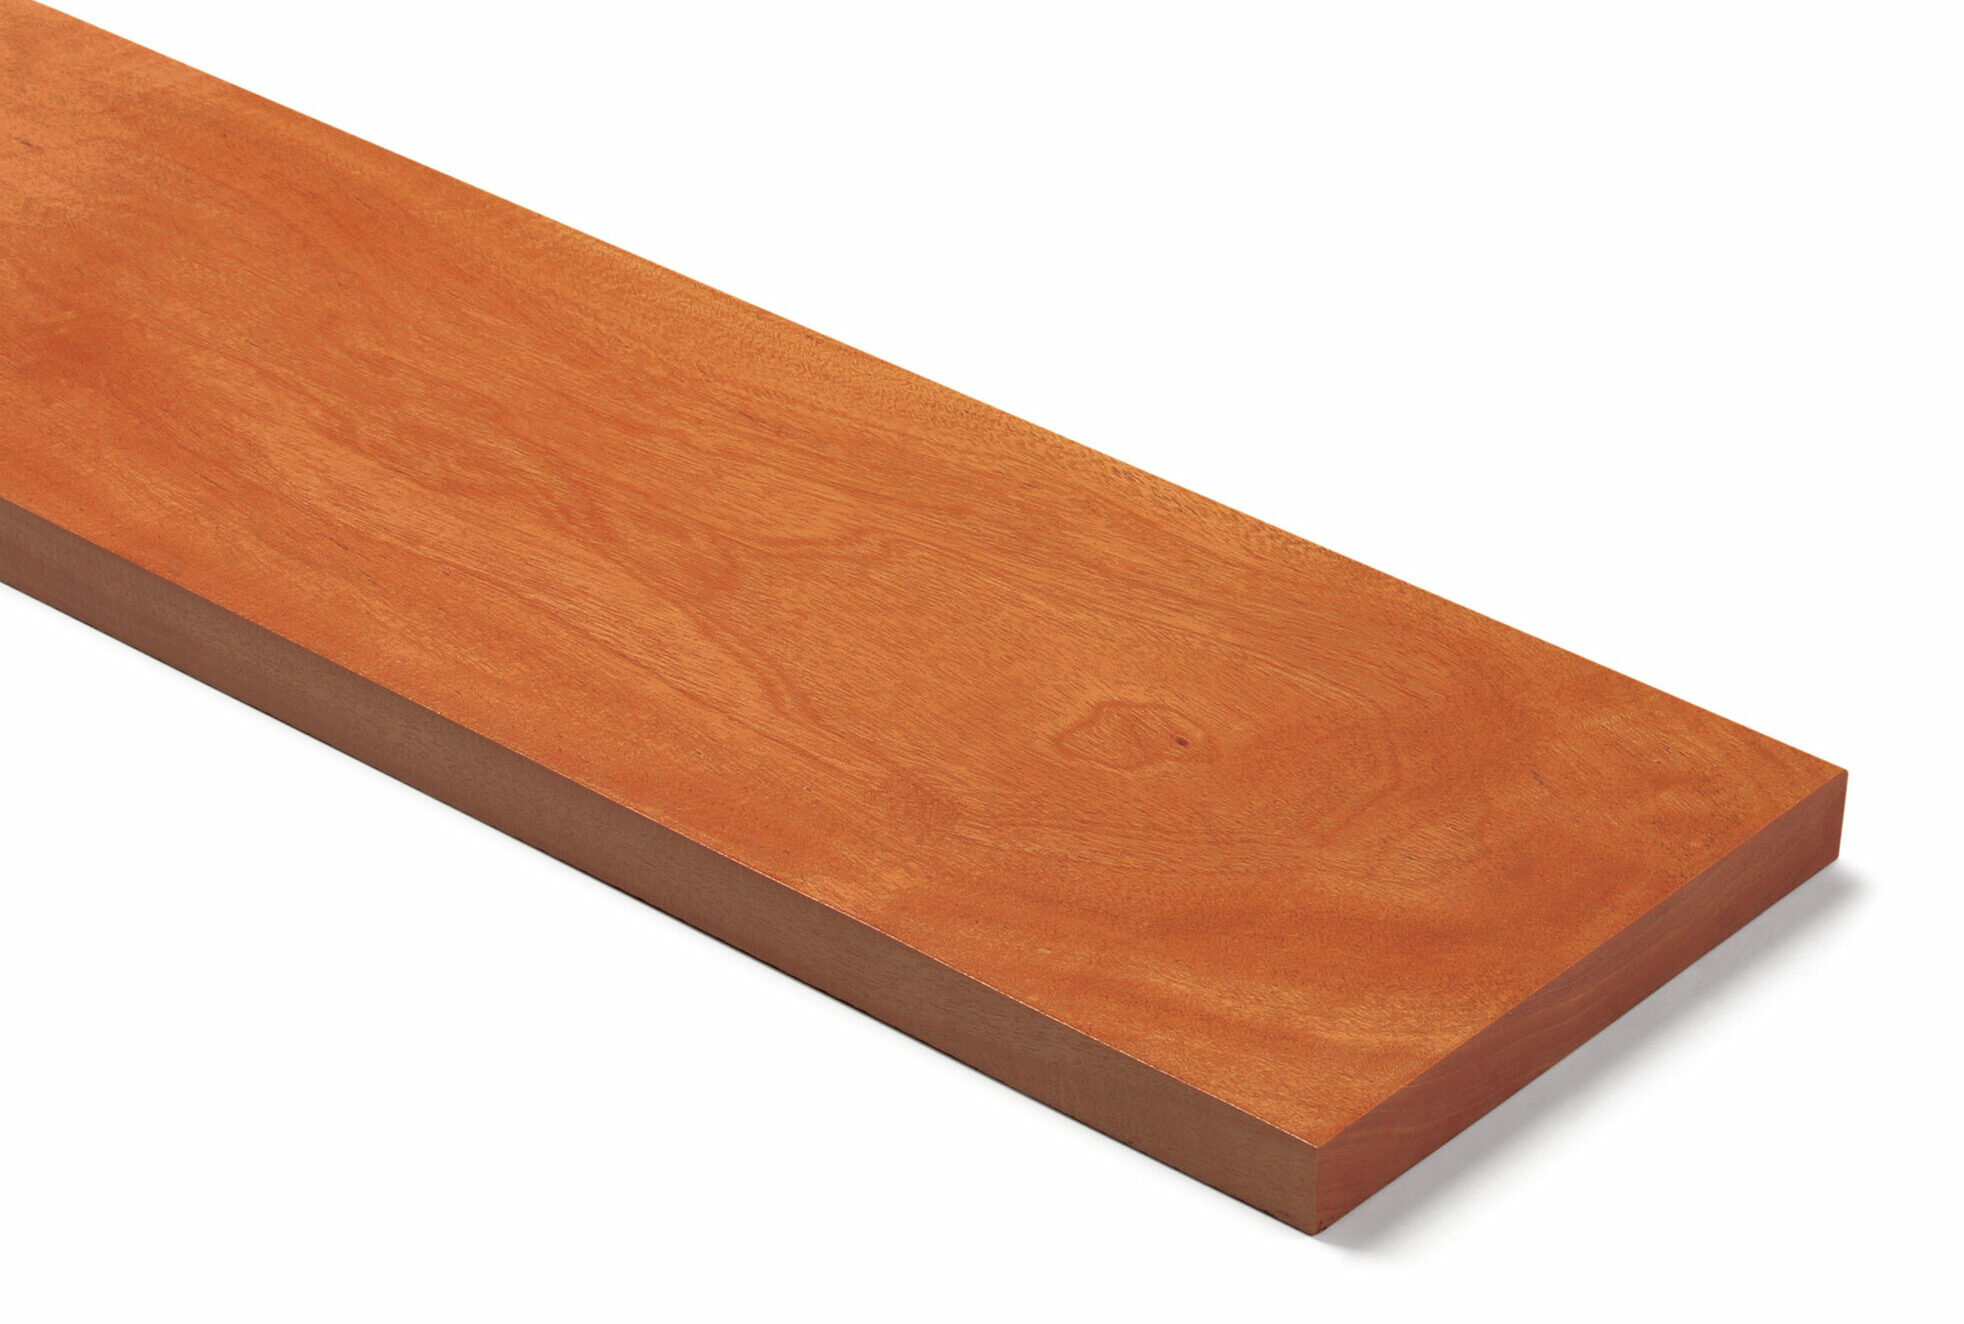 Cuban wood plank